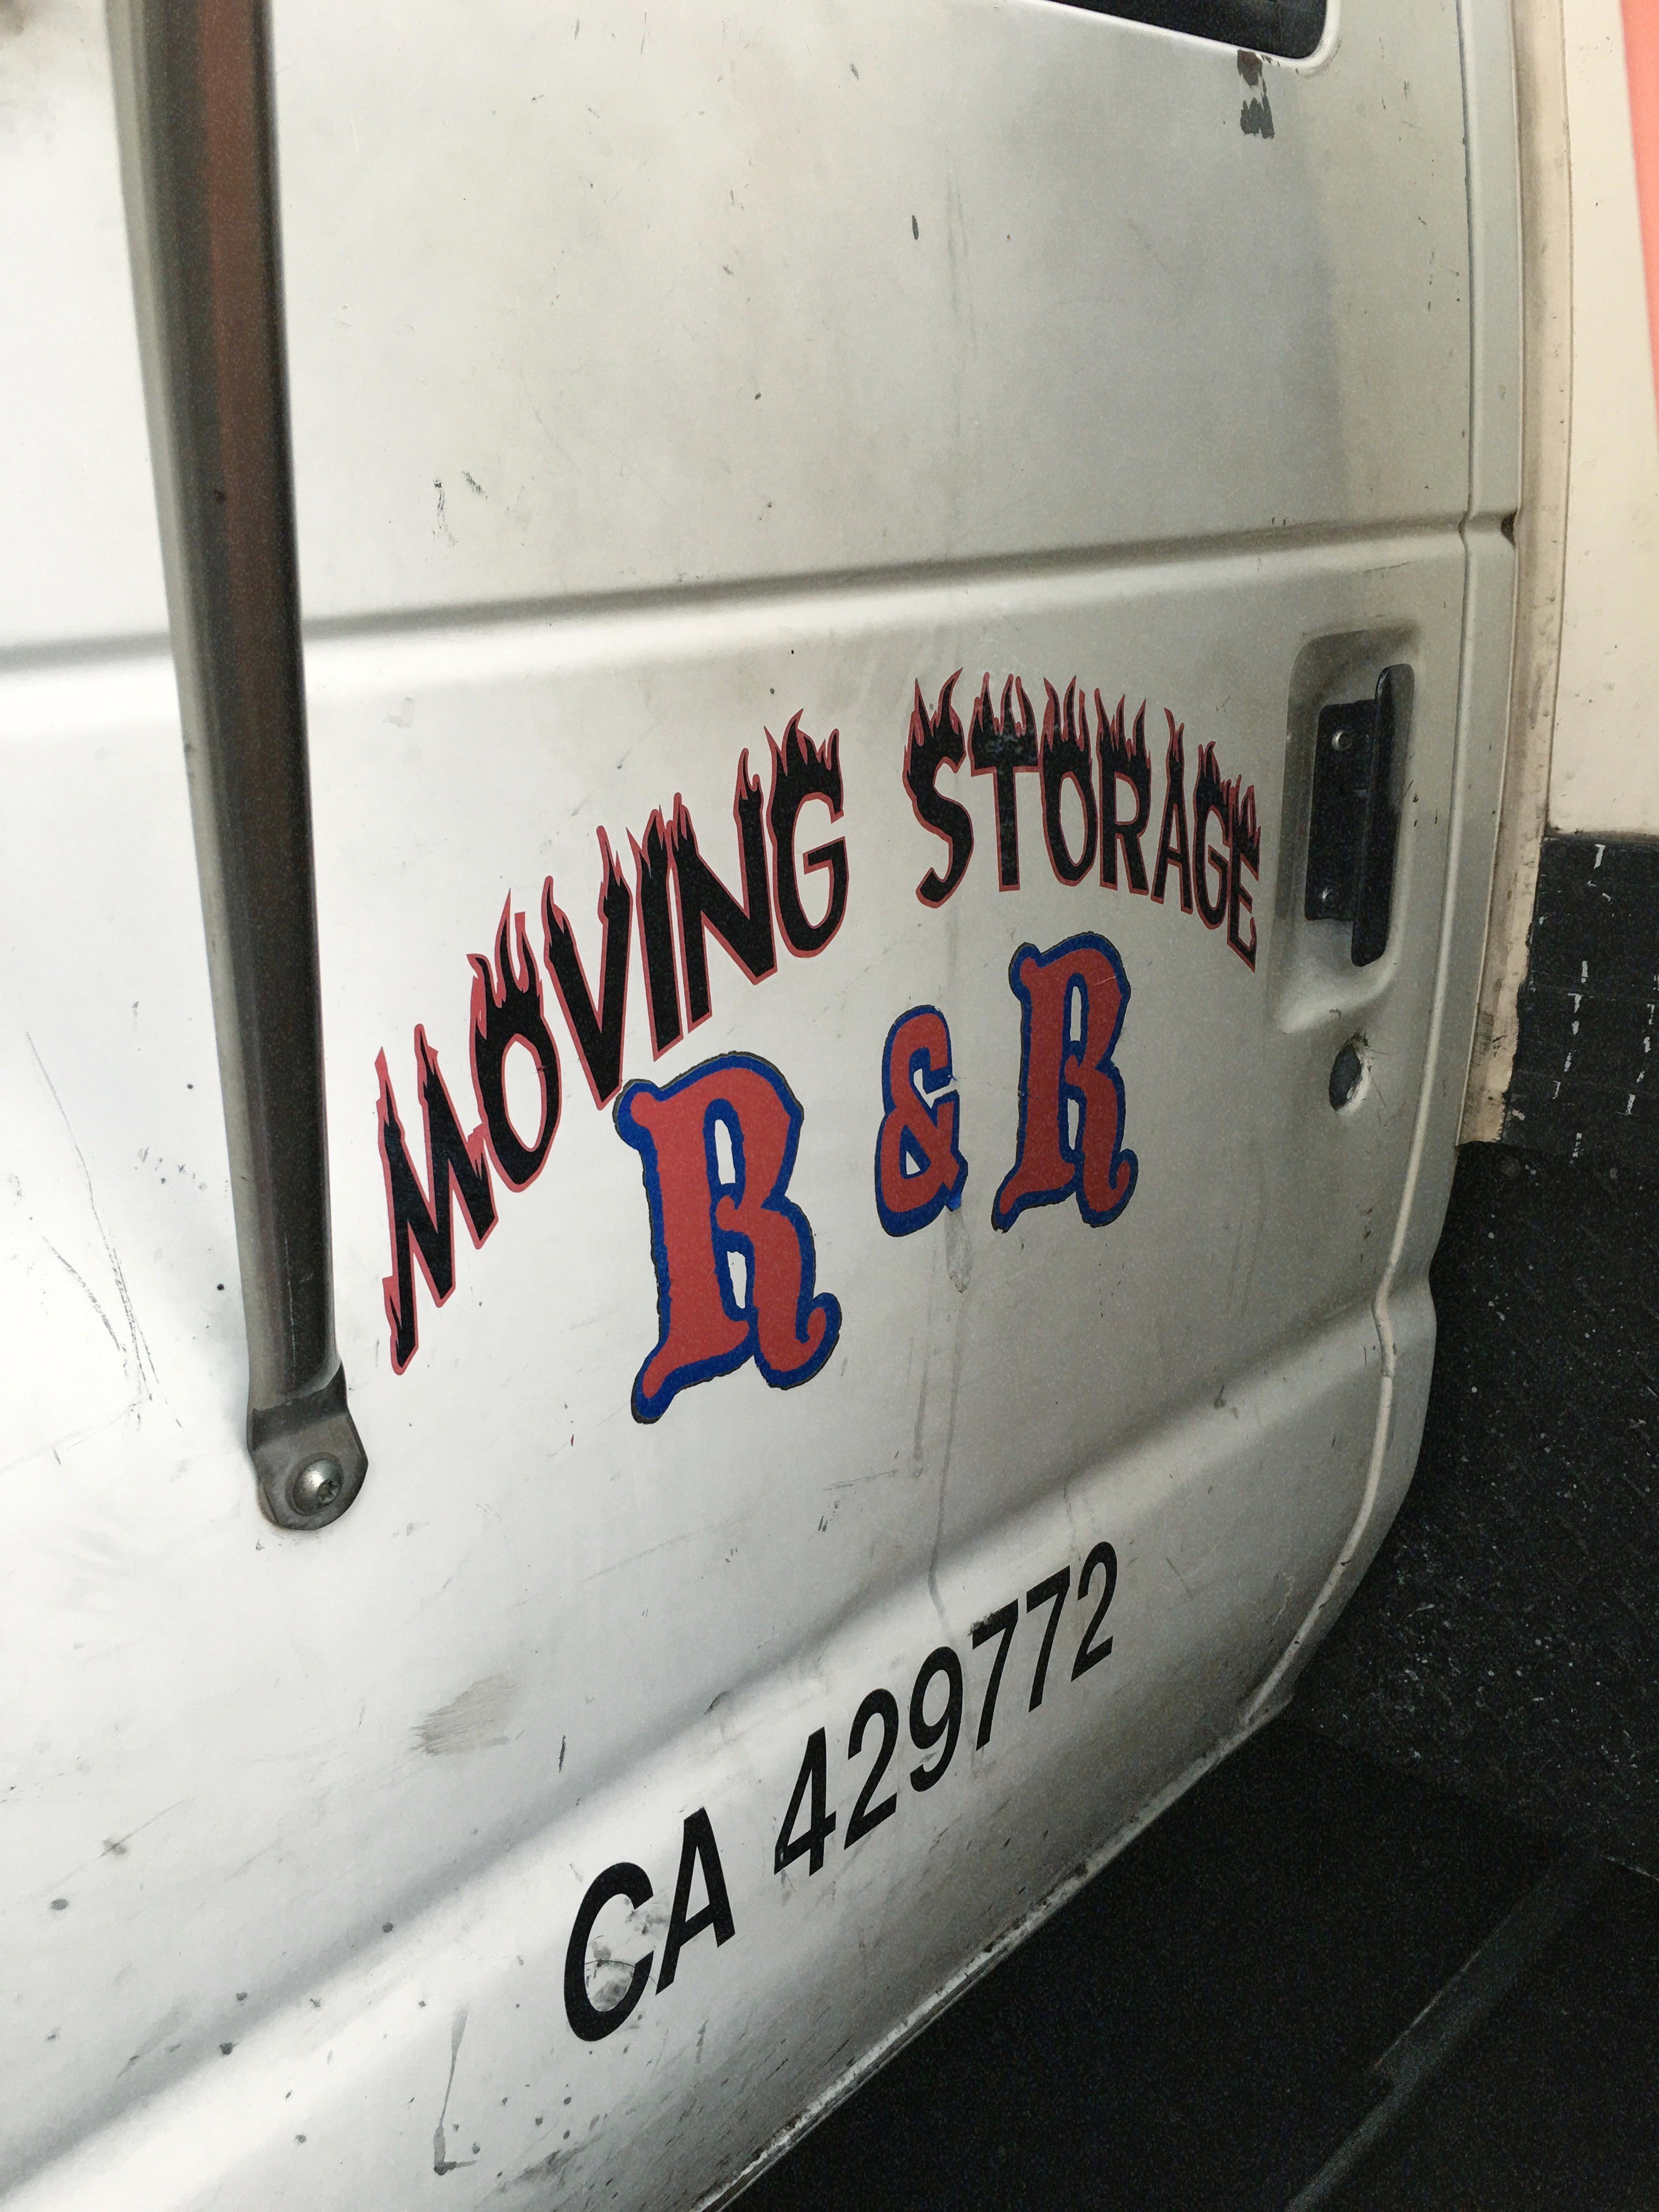 moving storage R & R